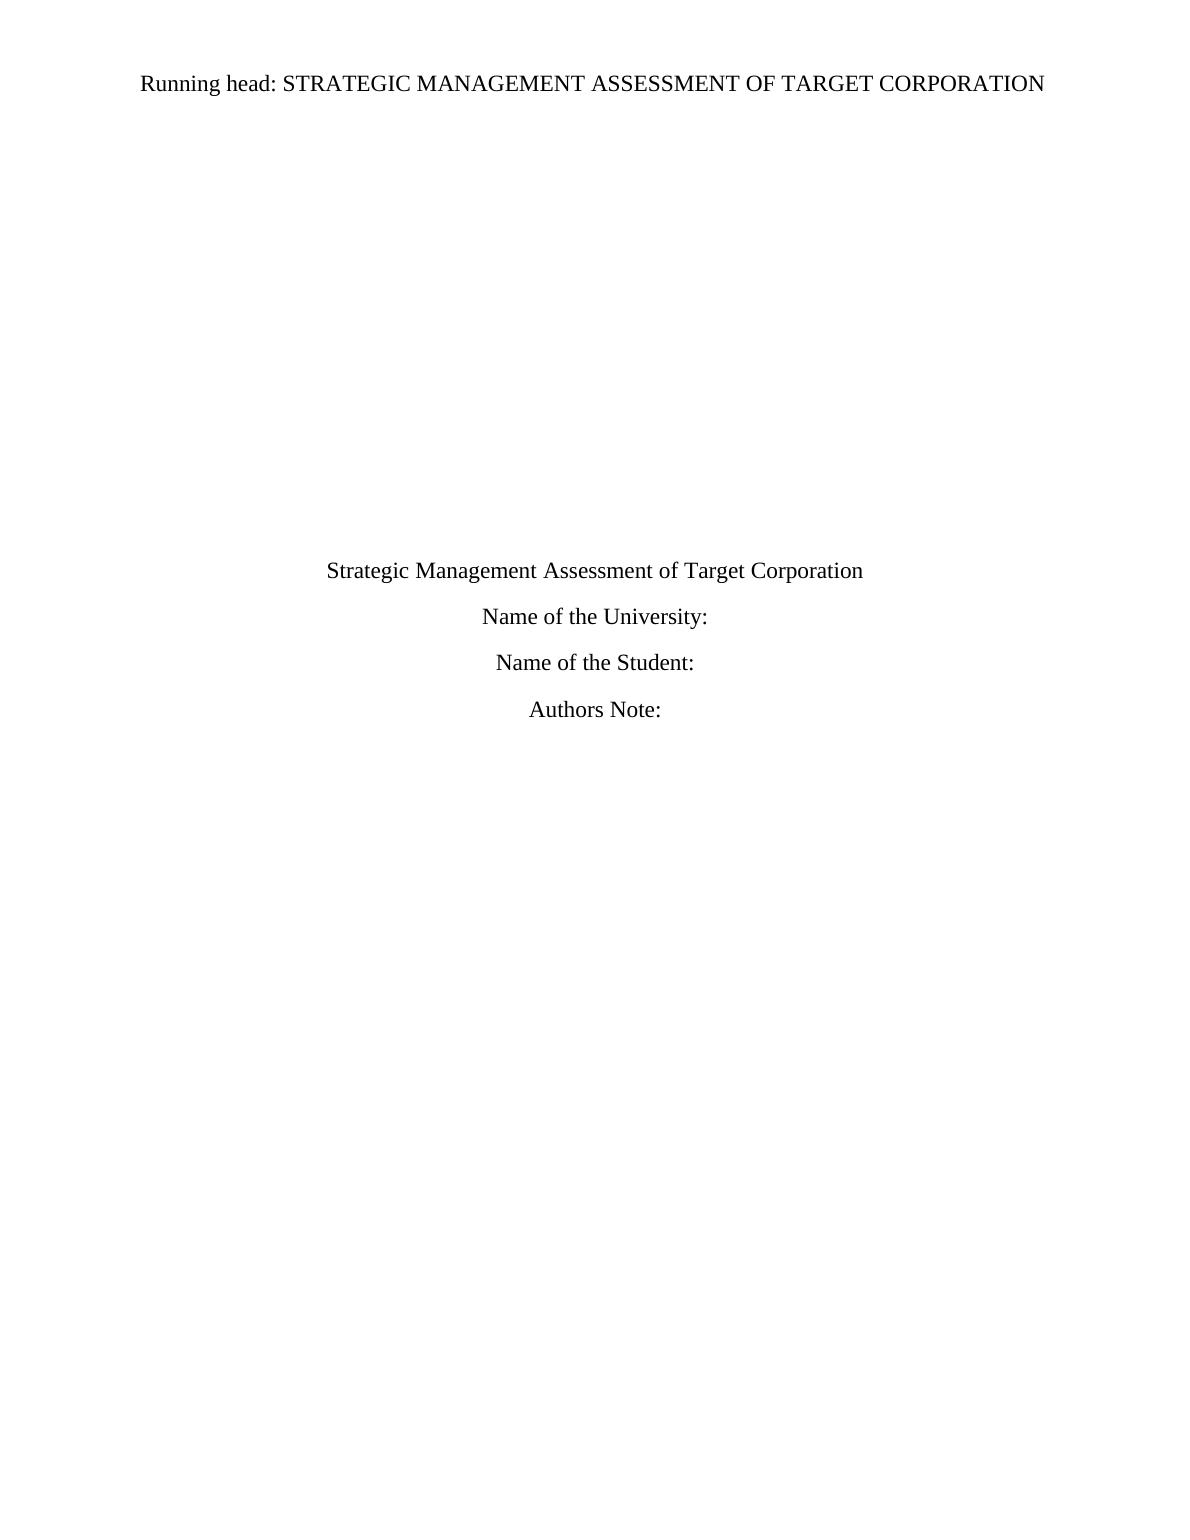 Strategic Management Assessment of Target Corporation_1